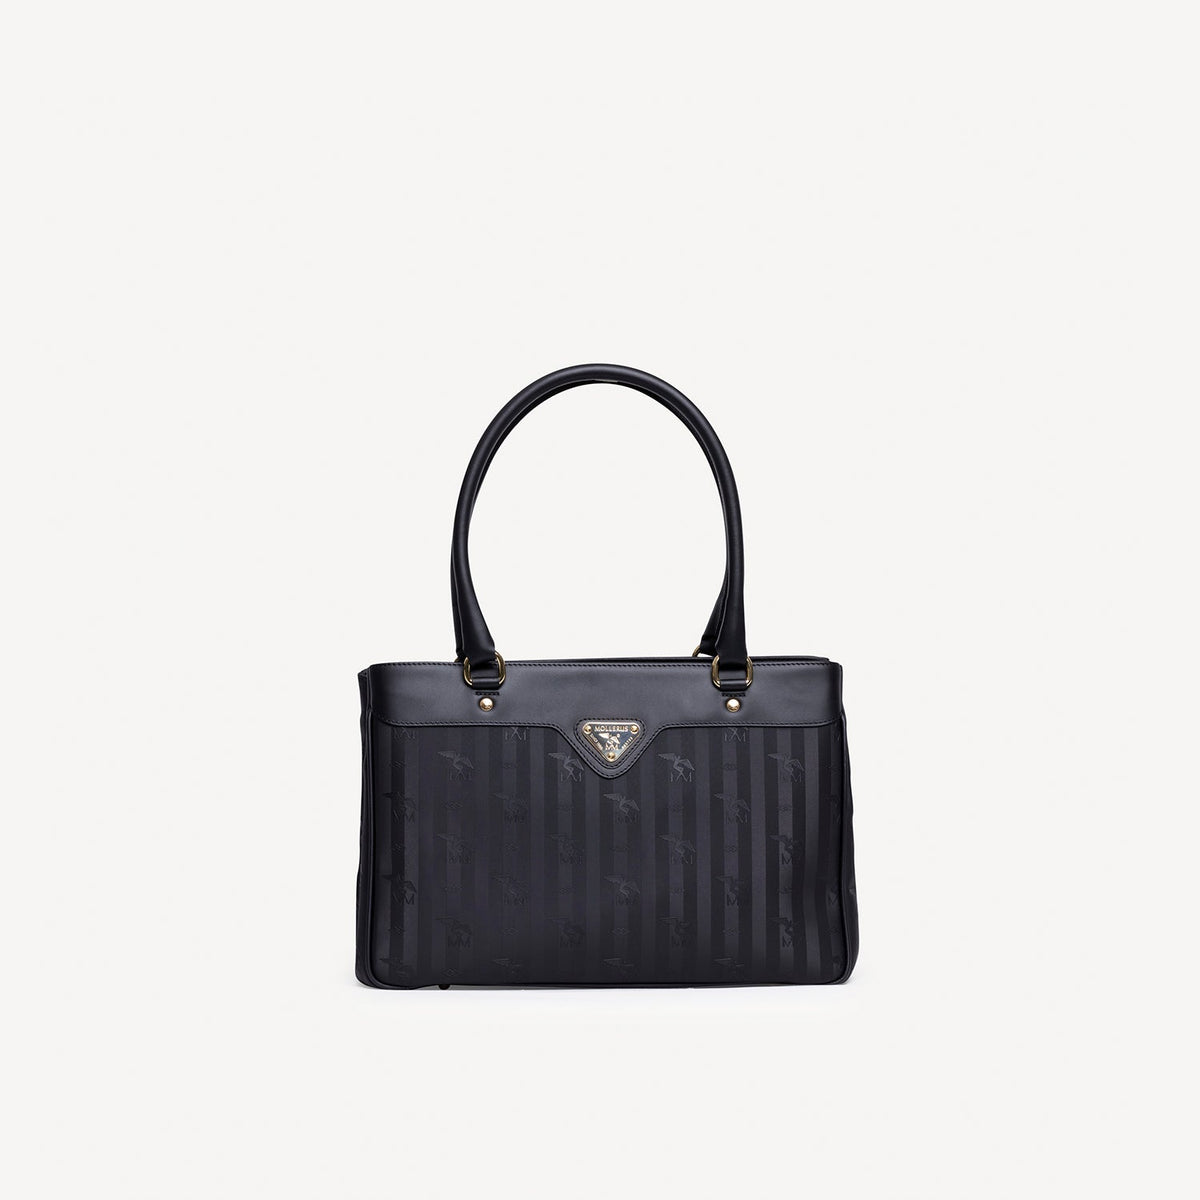 SULZ | Handbag black/gold